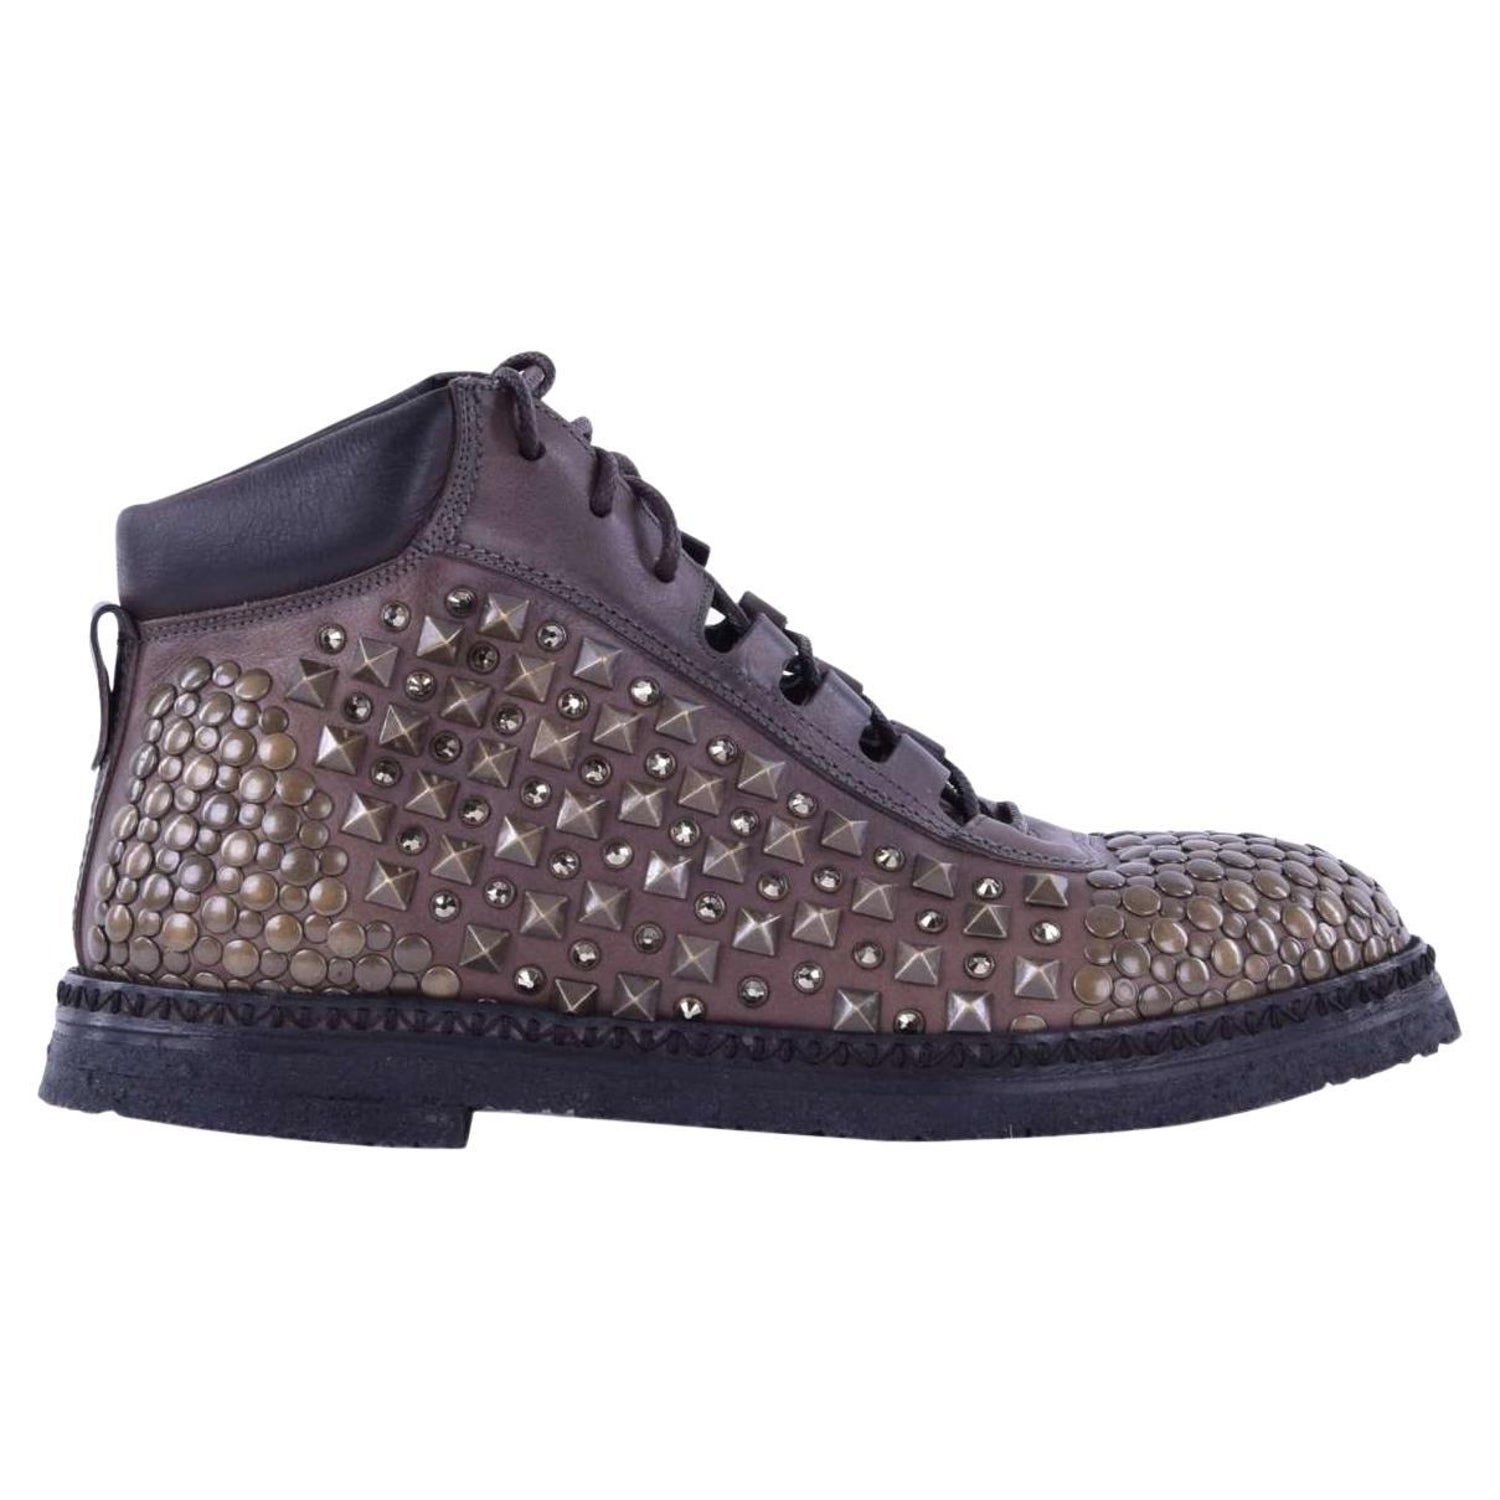 Dolce & Gabbana Formal Crocodile Leather Shoes NAPOLI Good Year